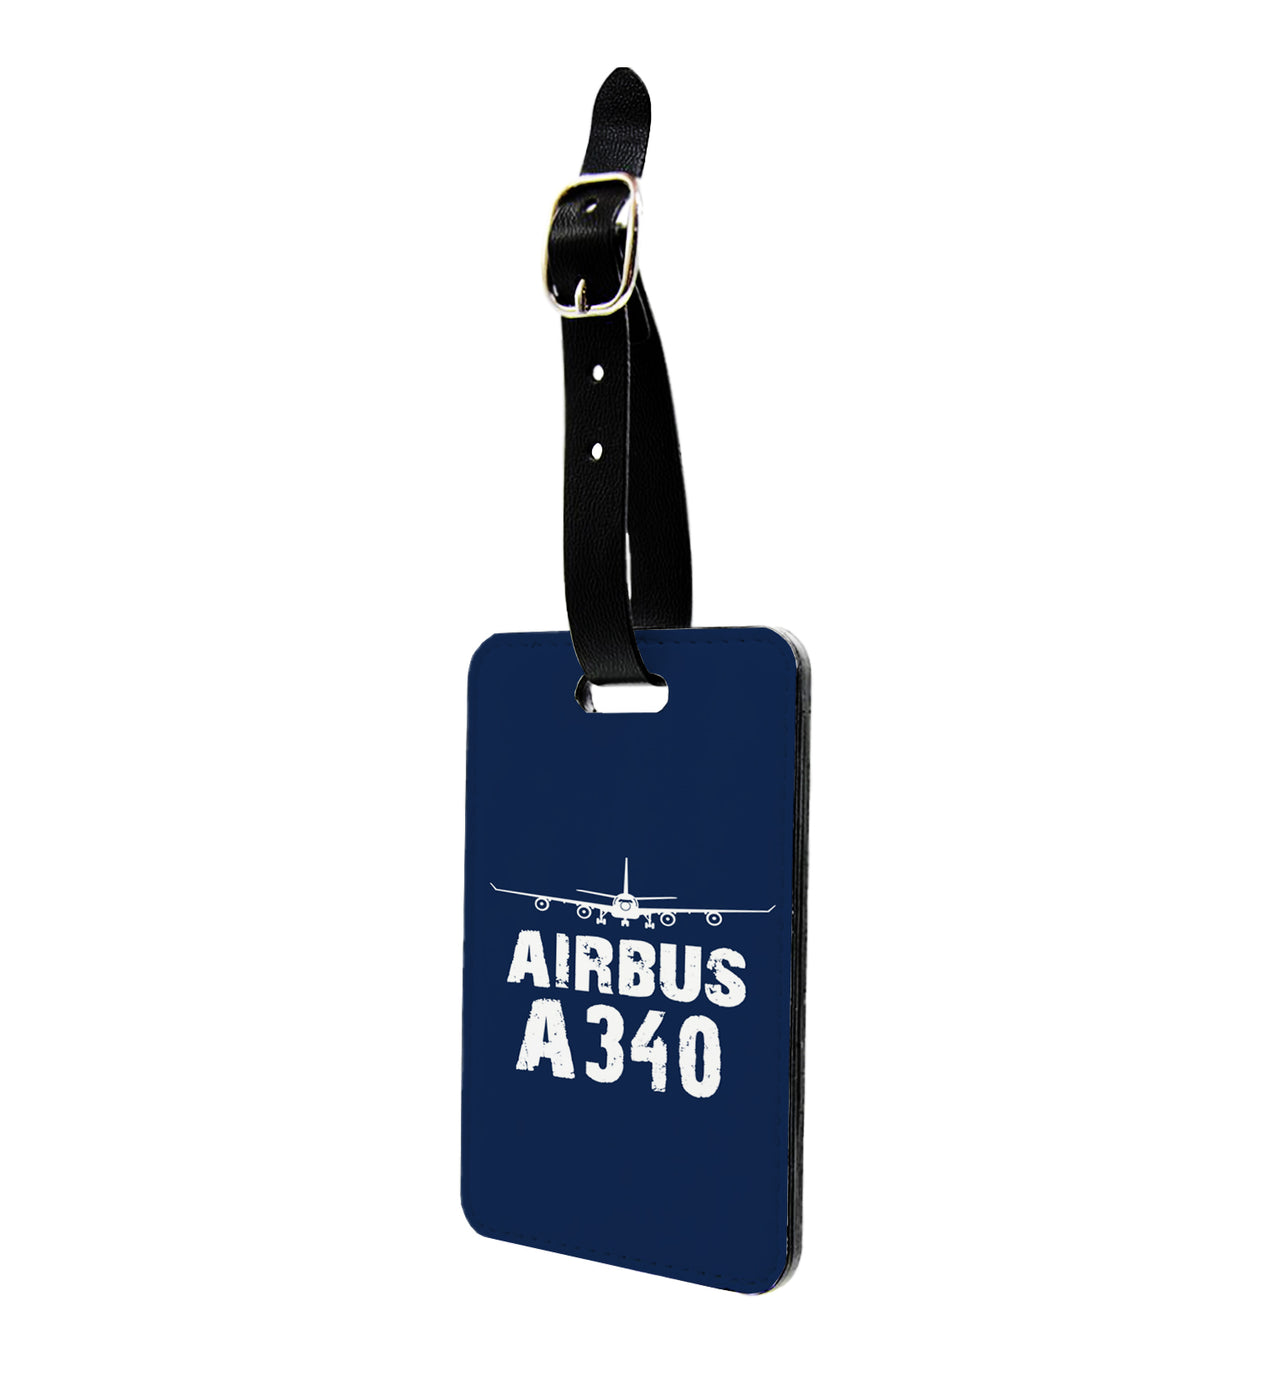 Airbus A340 & Plane Designed Luggage Tag